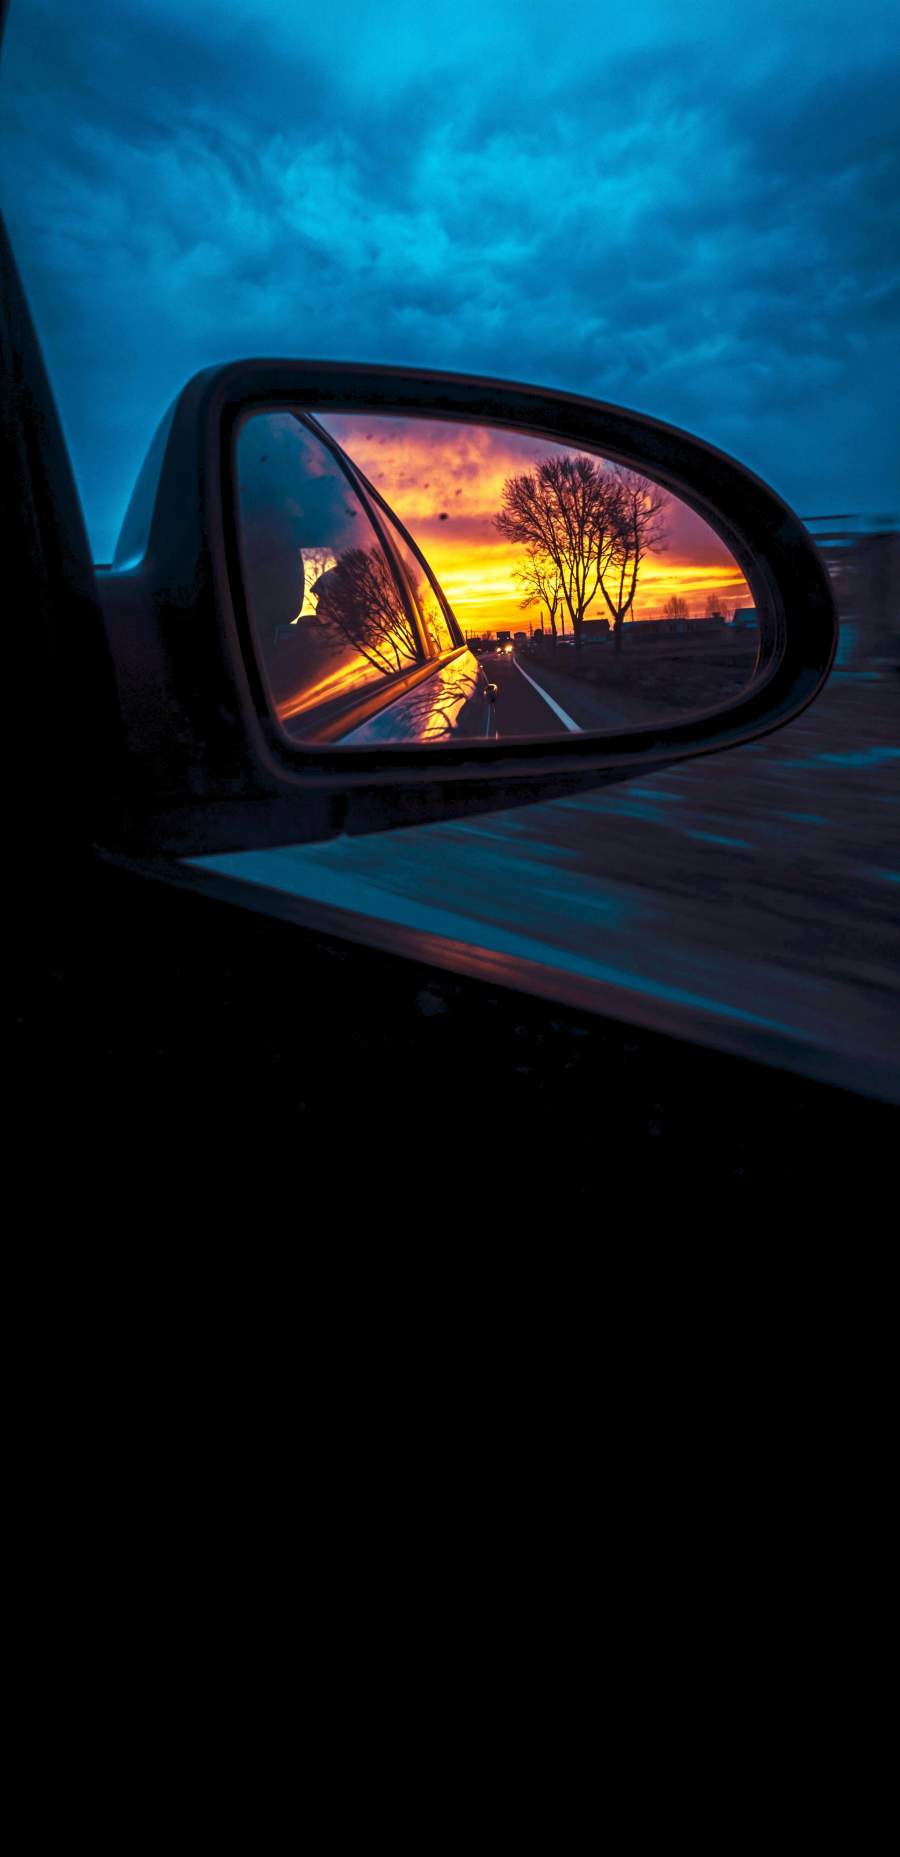 Reflection of sunset